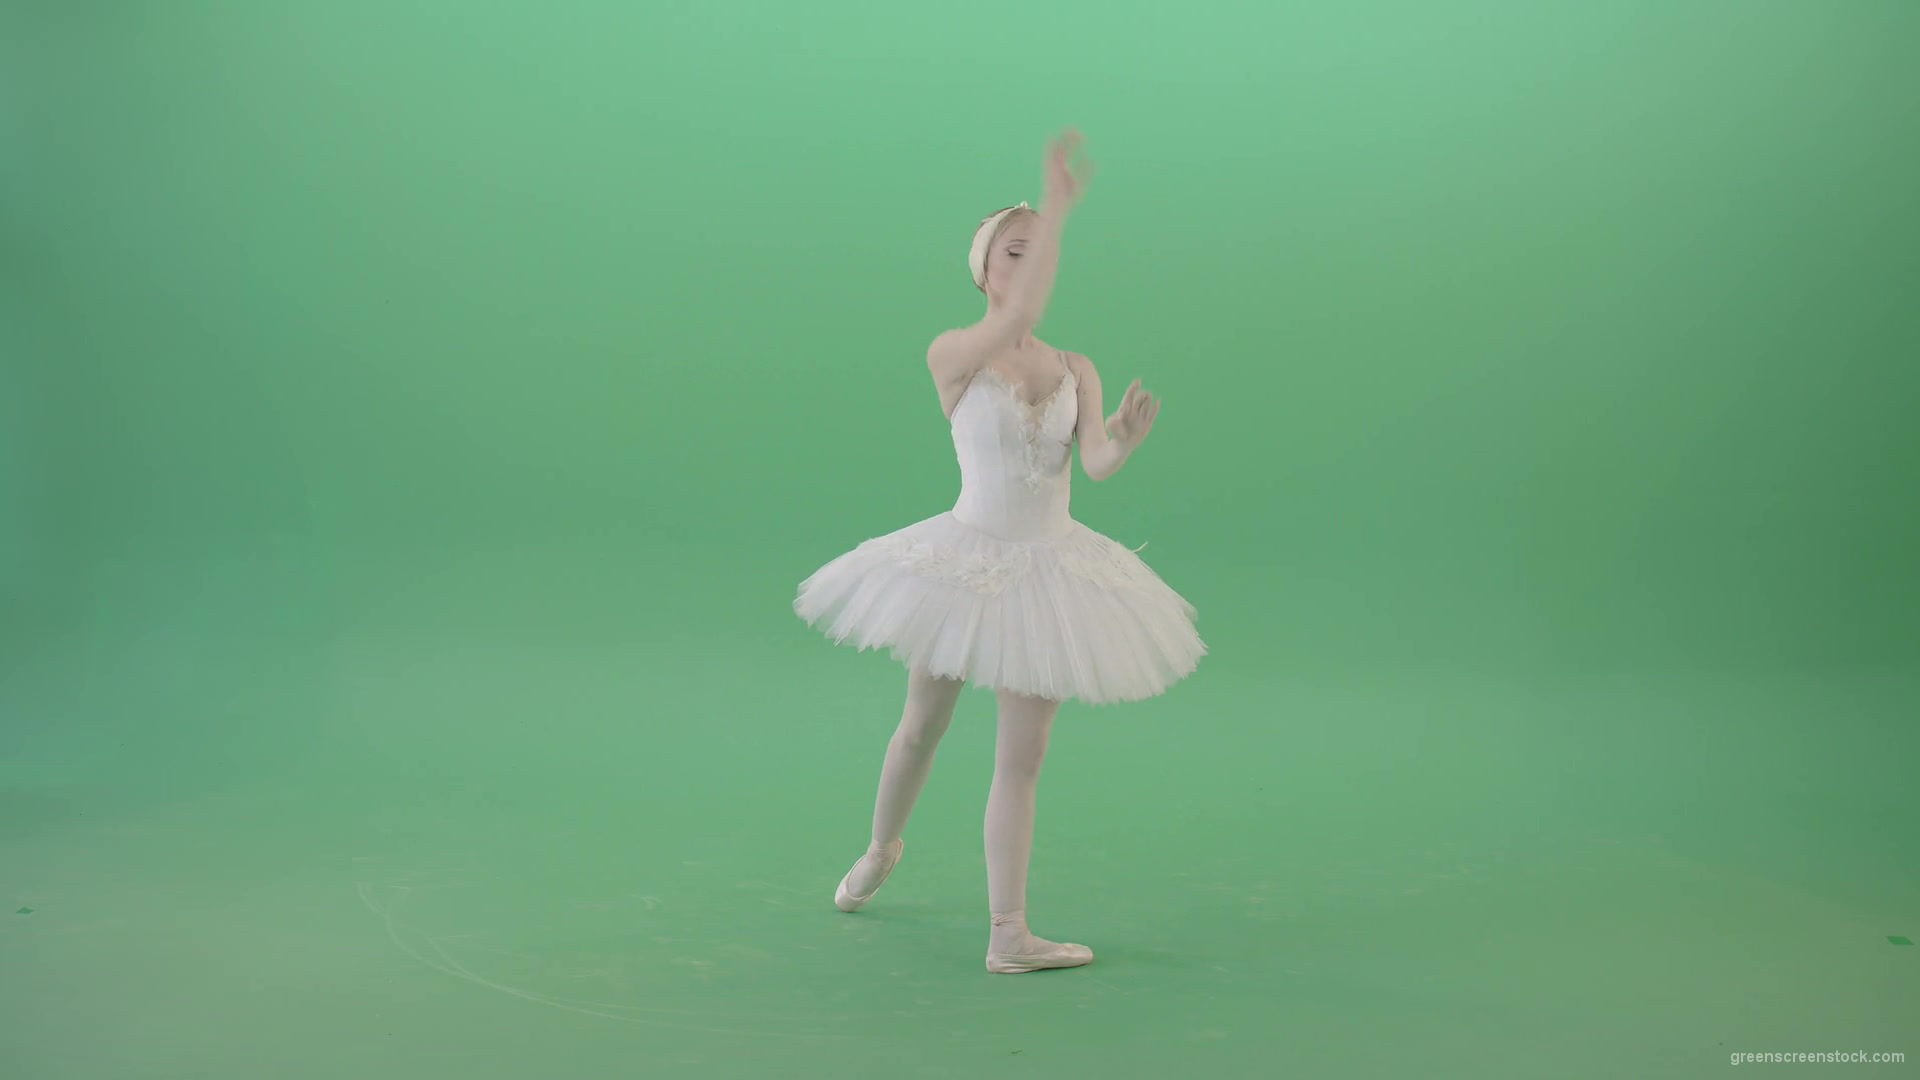 Elegant-snowwhite-ballet-dancer-ballerina-dancing-isolated-on-Green-Screen-4K-Video-Footage-1920_009 Green Screen Stock